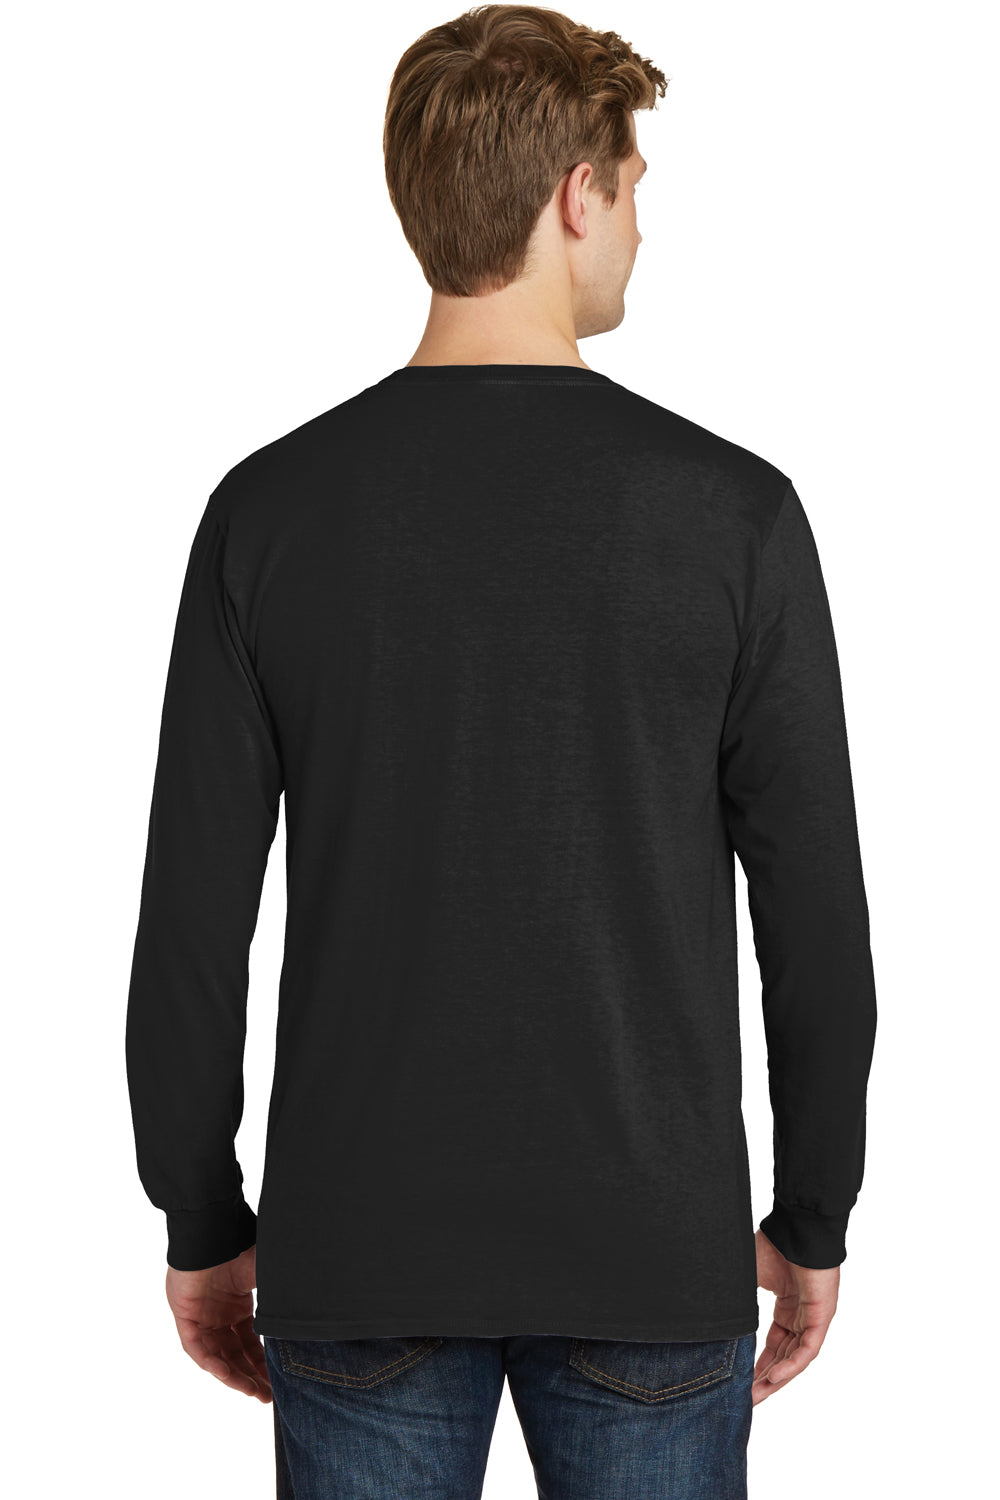 Port & Company PC099LSP Mens Beach Wash Long Sleeve Crewneck T-Shirt w/ Pocket Black Back